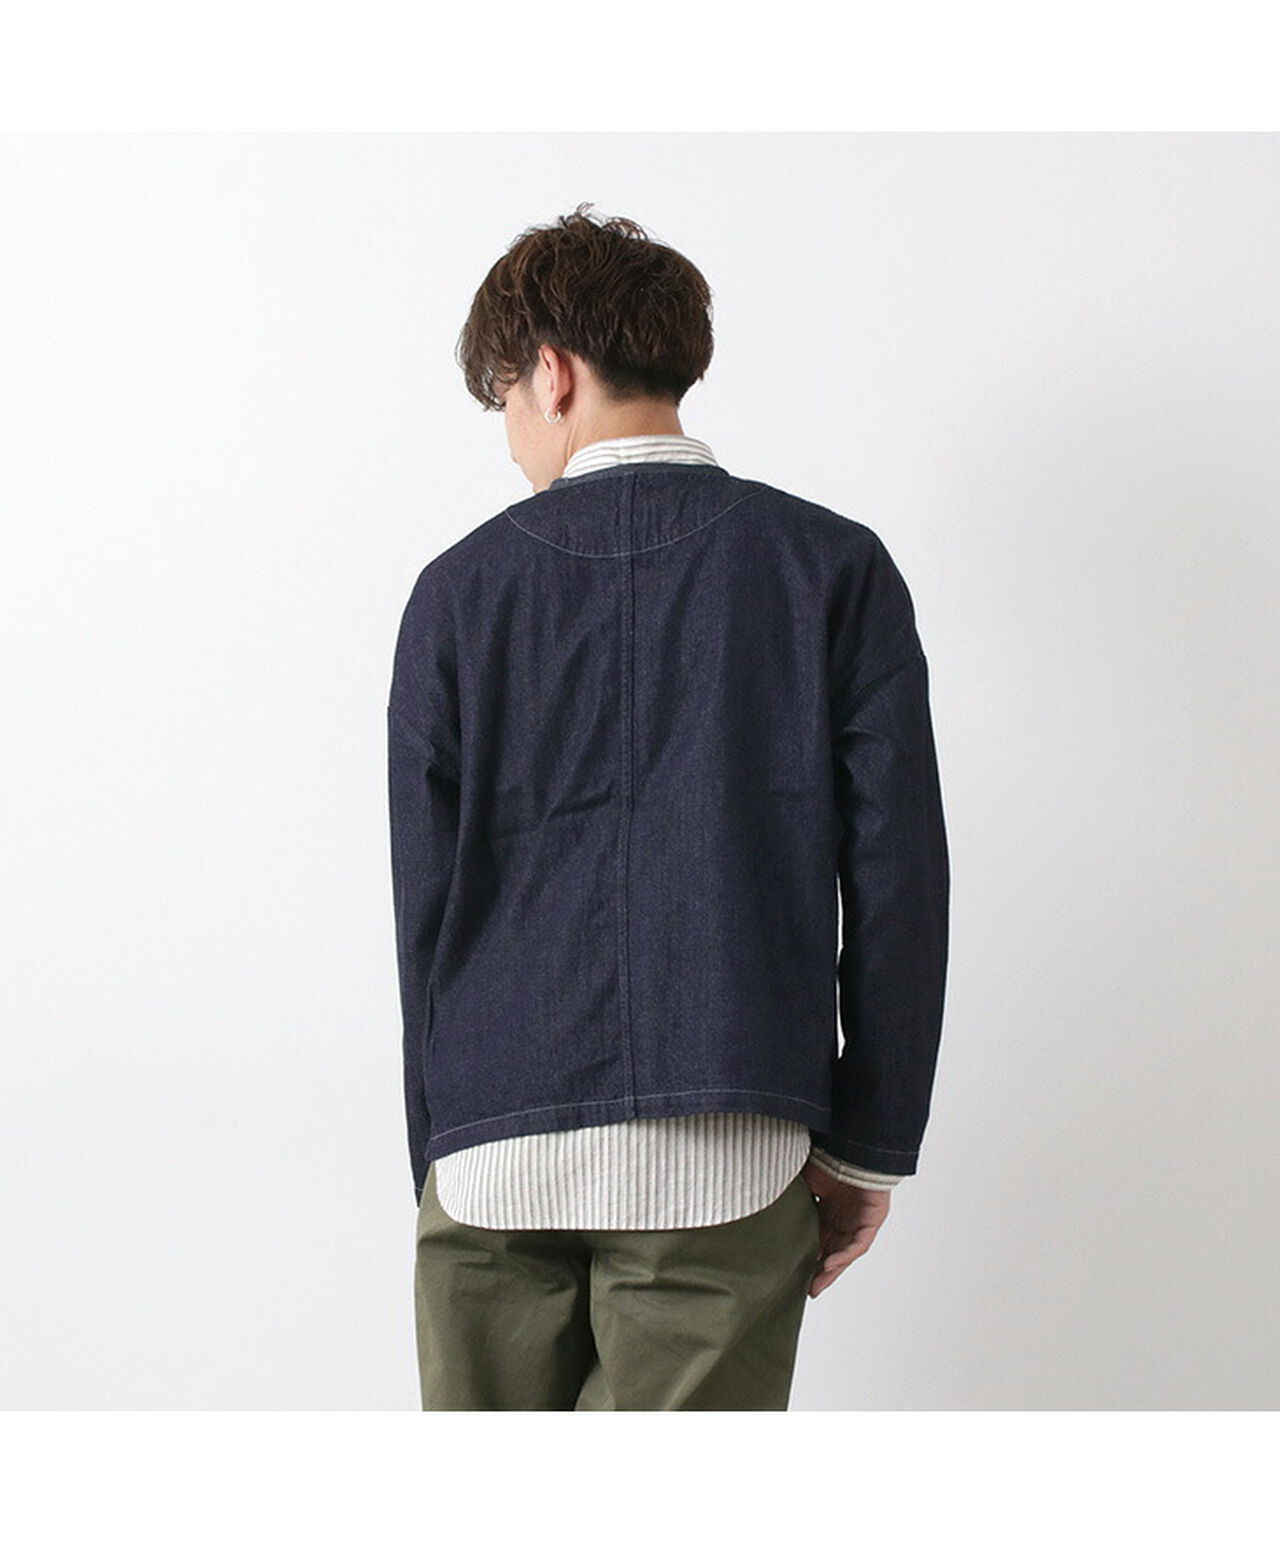 Atelier jacket / 8oz denim,, large image number 12